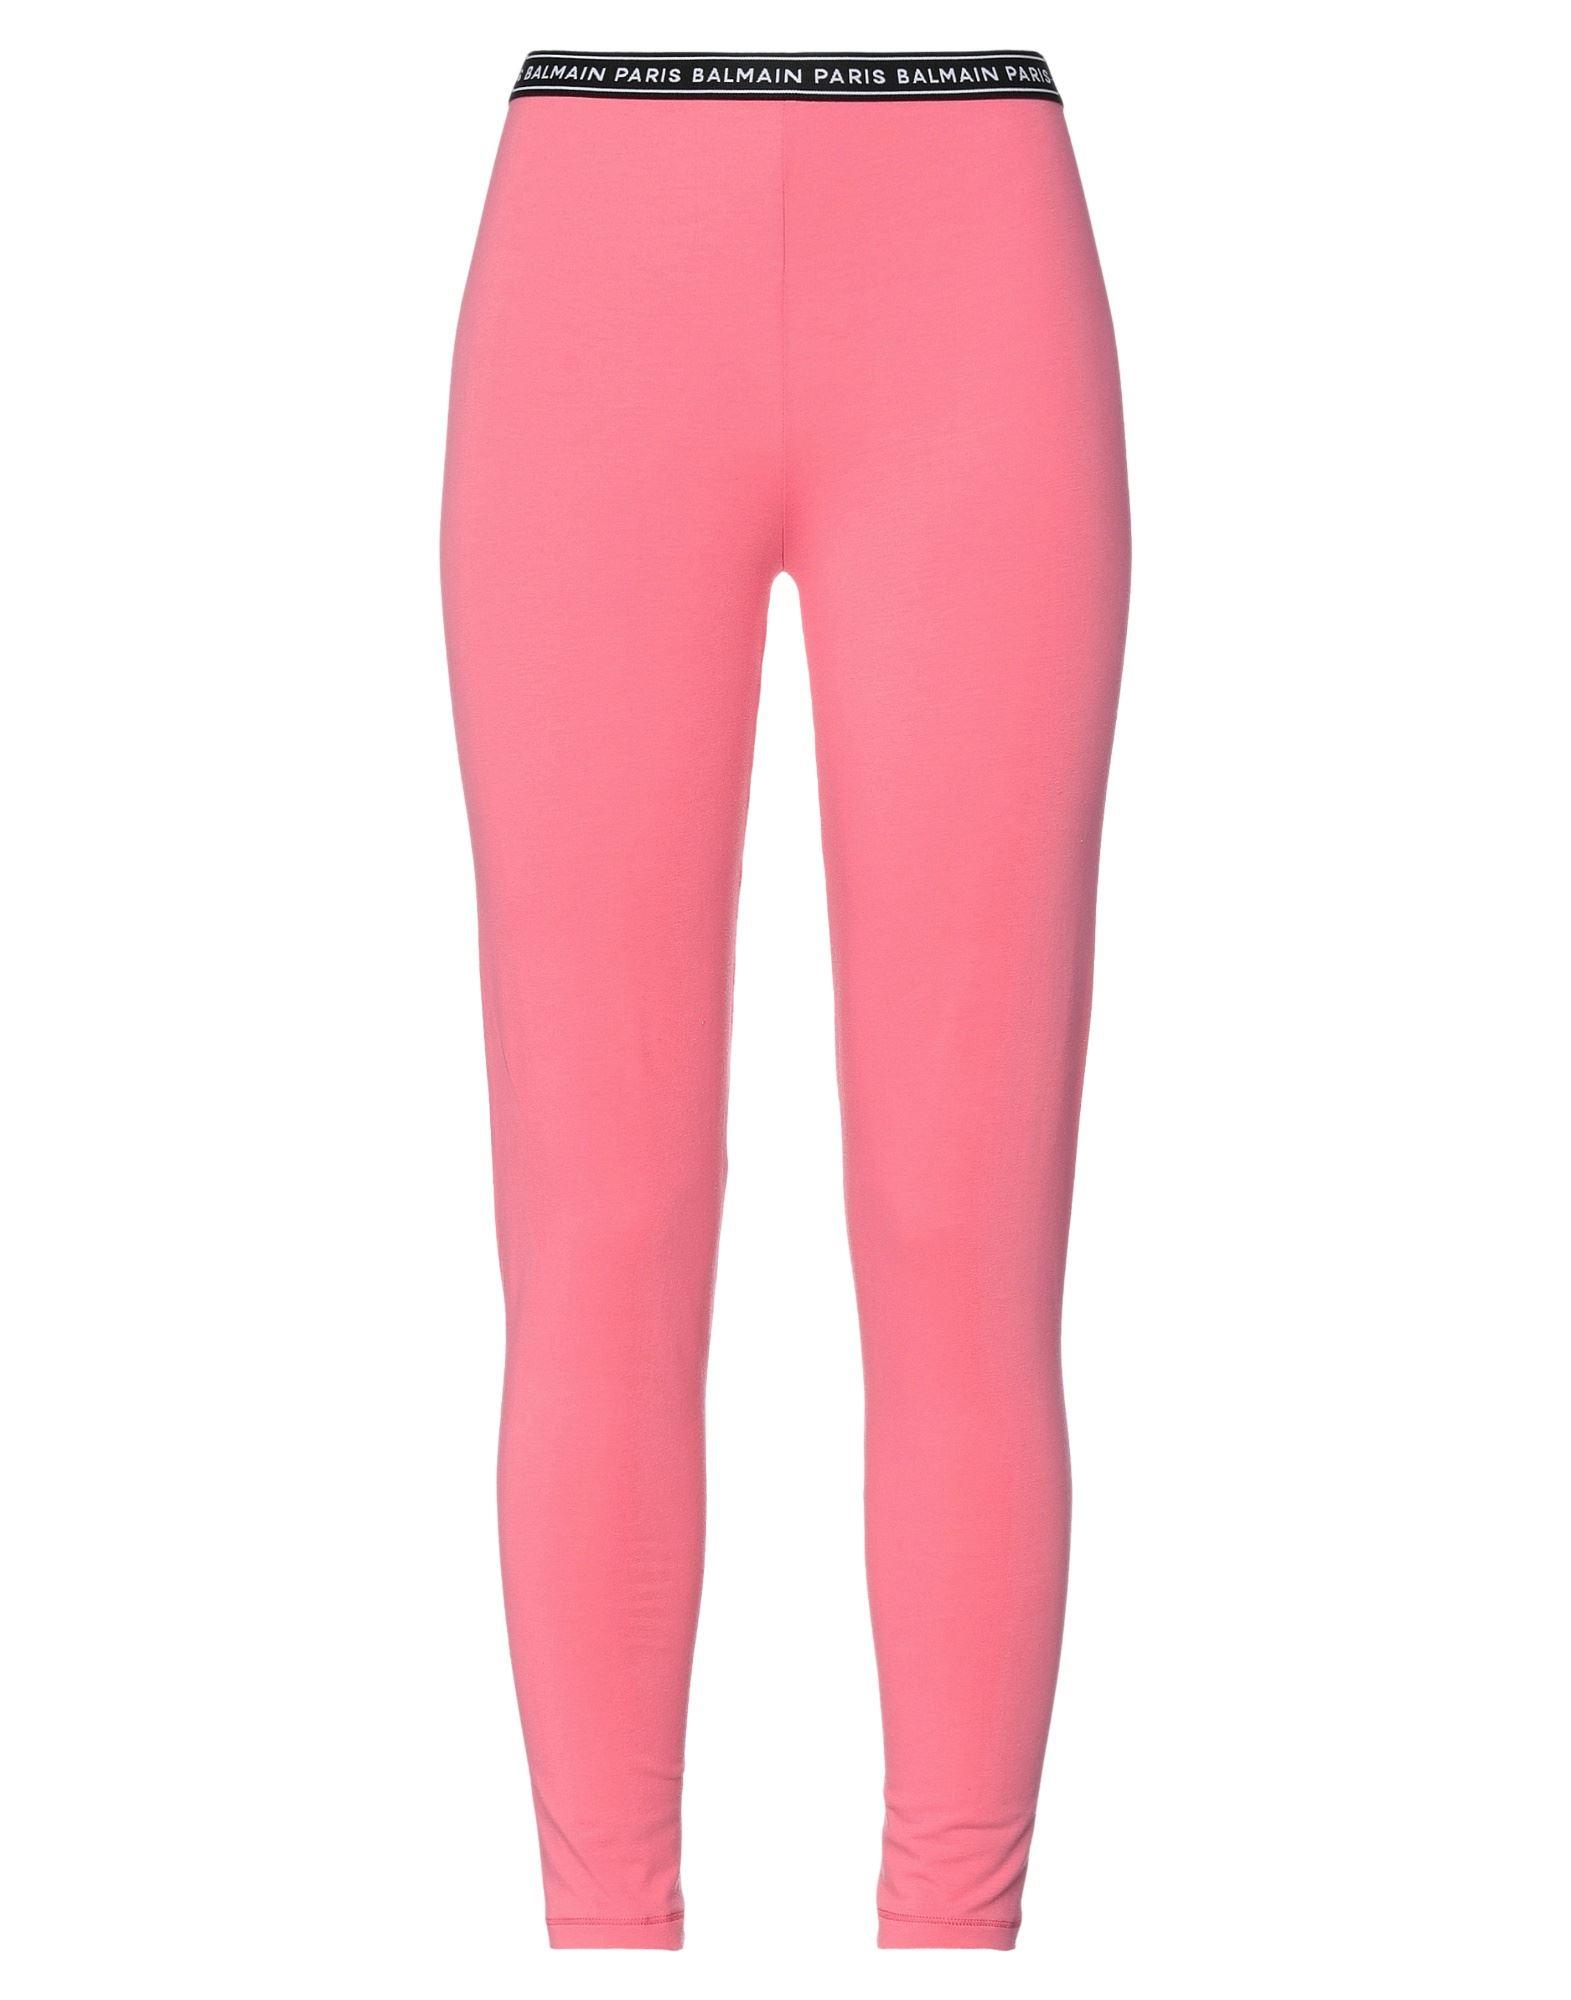 Balmain Cotton Leggings in Pink | Lyst